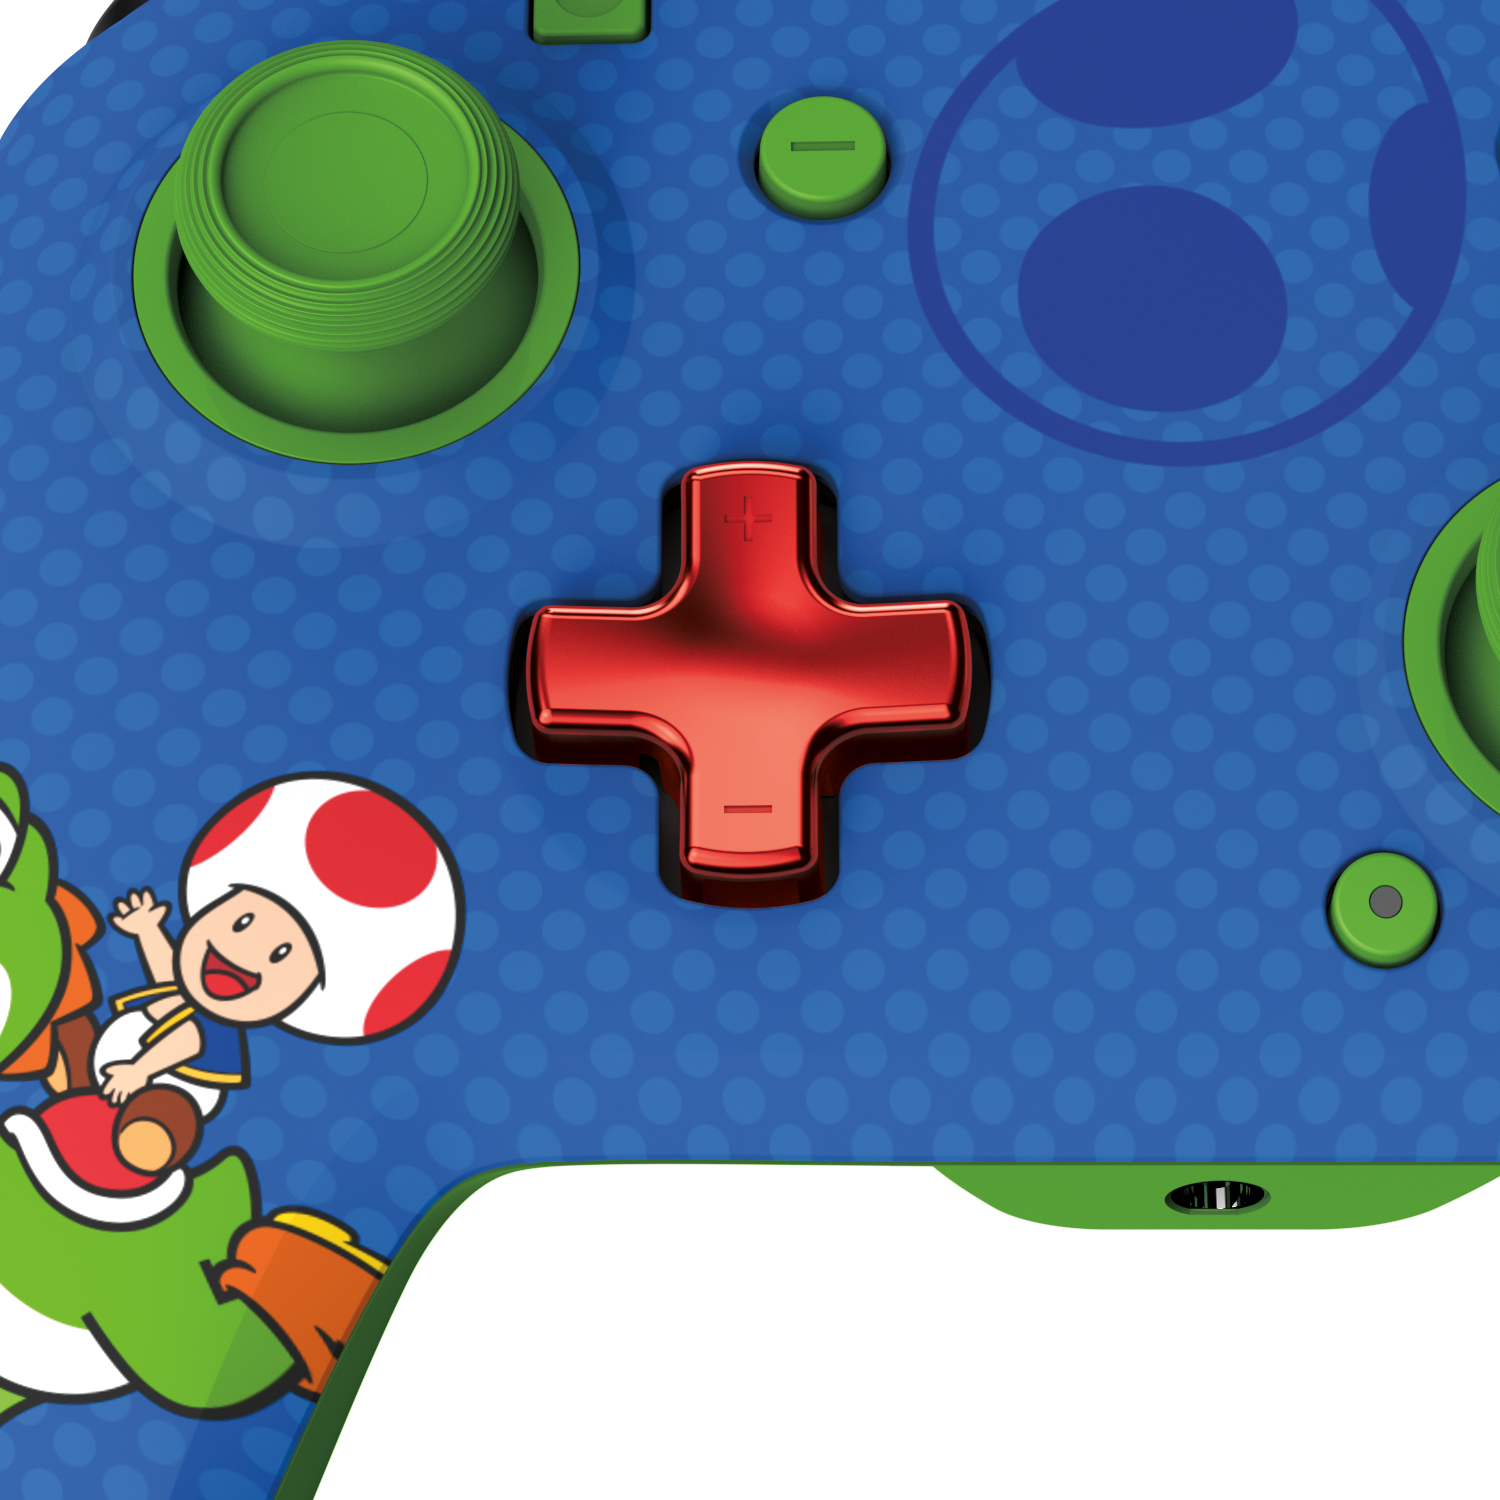 LLC OLED PDP Switch, Nintendo Controller REMATCH Toad & für Blau/Grün Switch Nintendo Kabelgebundener Yoshi